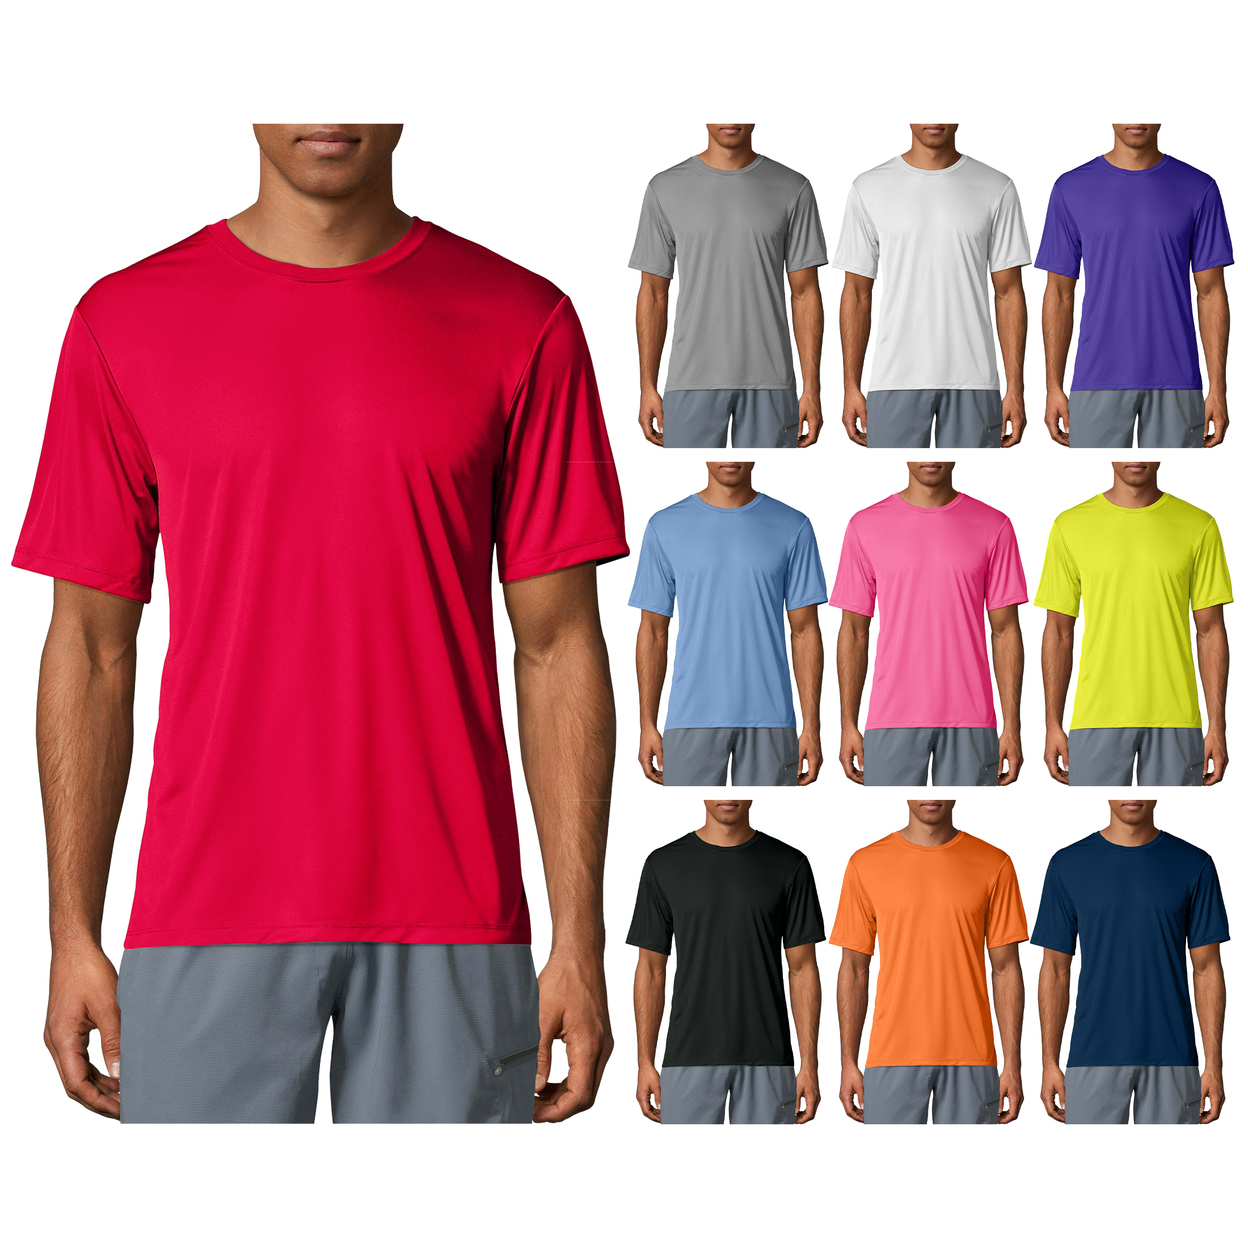 4-Pack: Men's Moisture Wicking Cool Dri-Fit Performance Short Sleeve Crew Neck T-Shirts - Medium